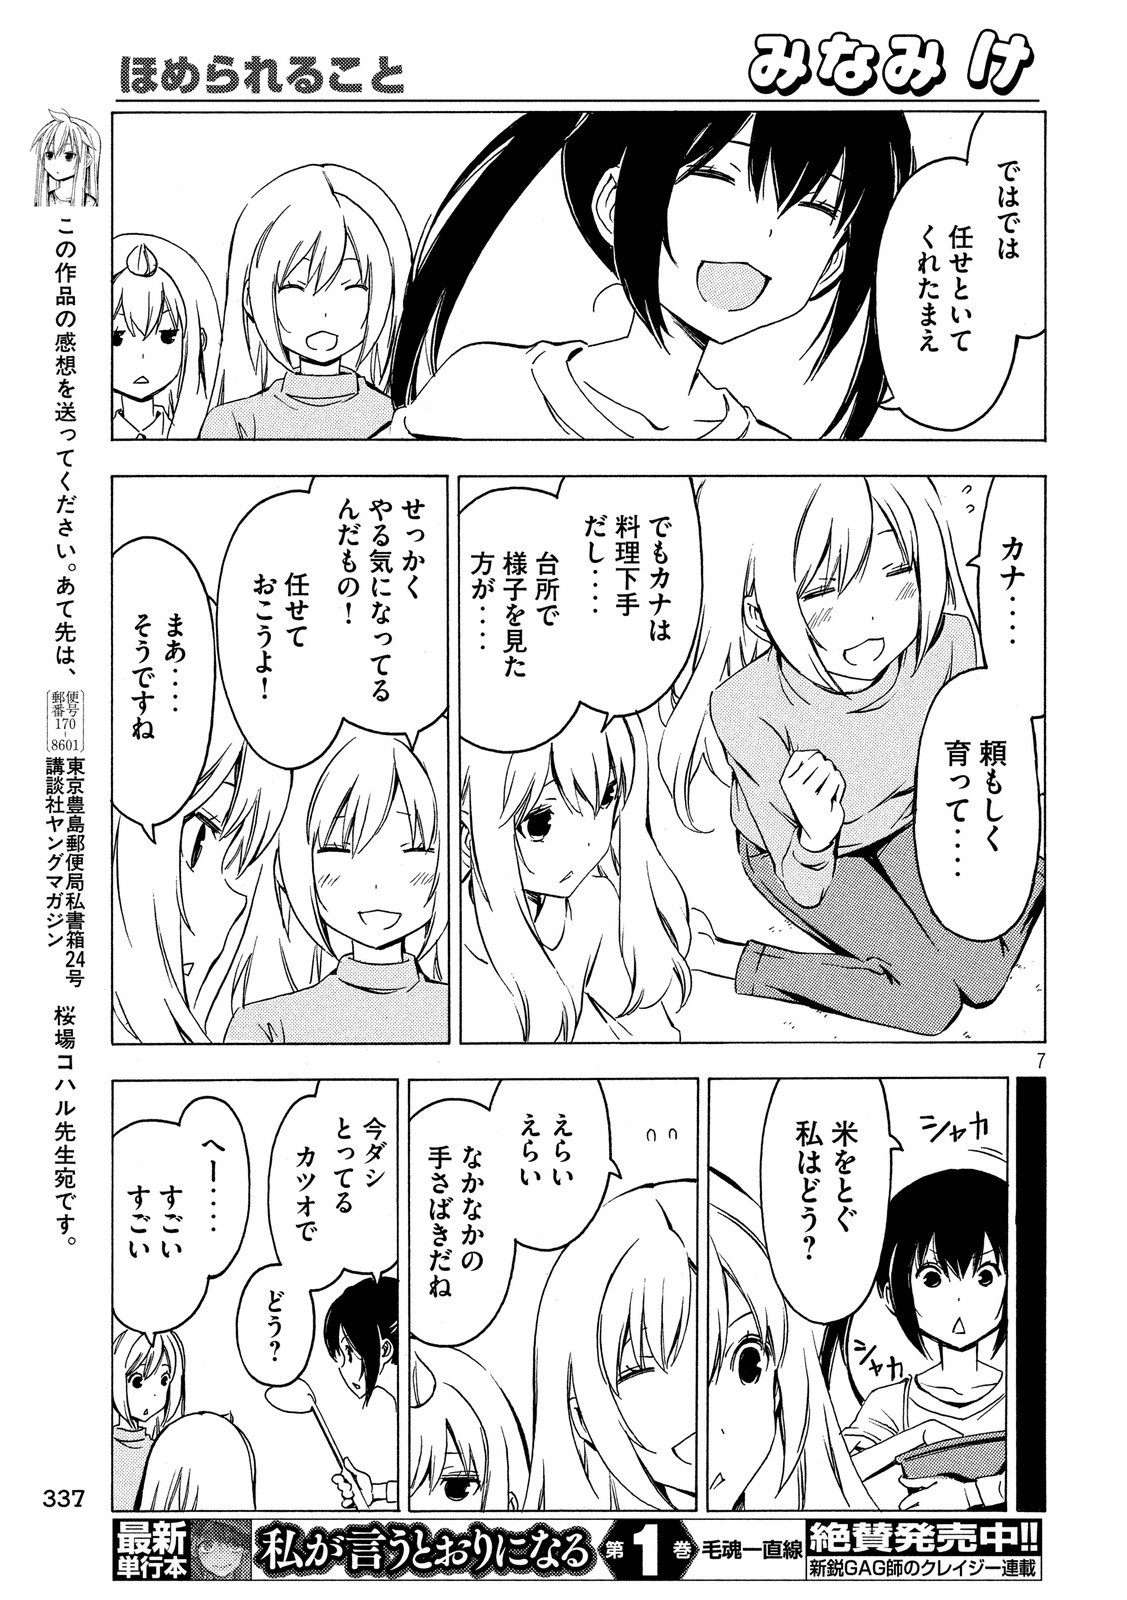 Minami-ke - Chapter 281 - Page 7